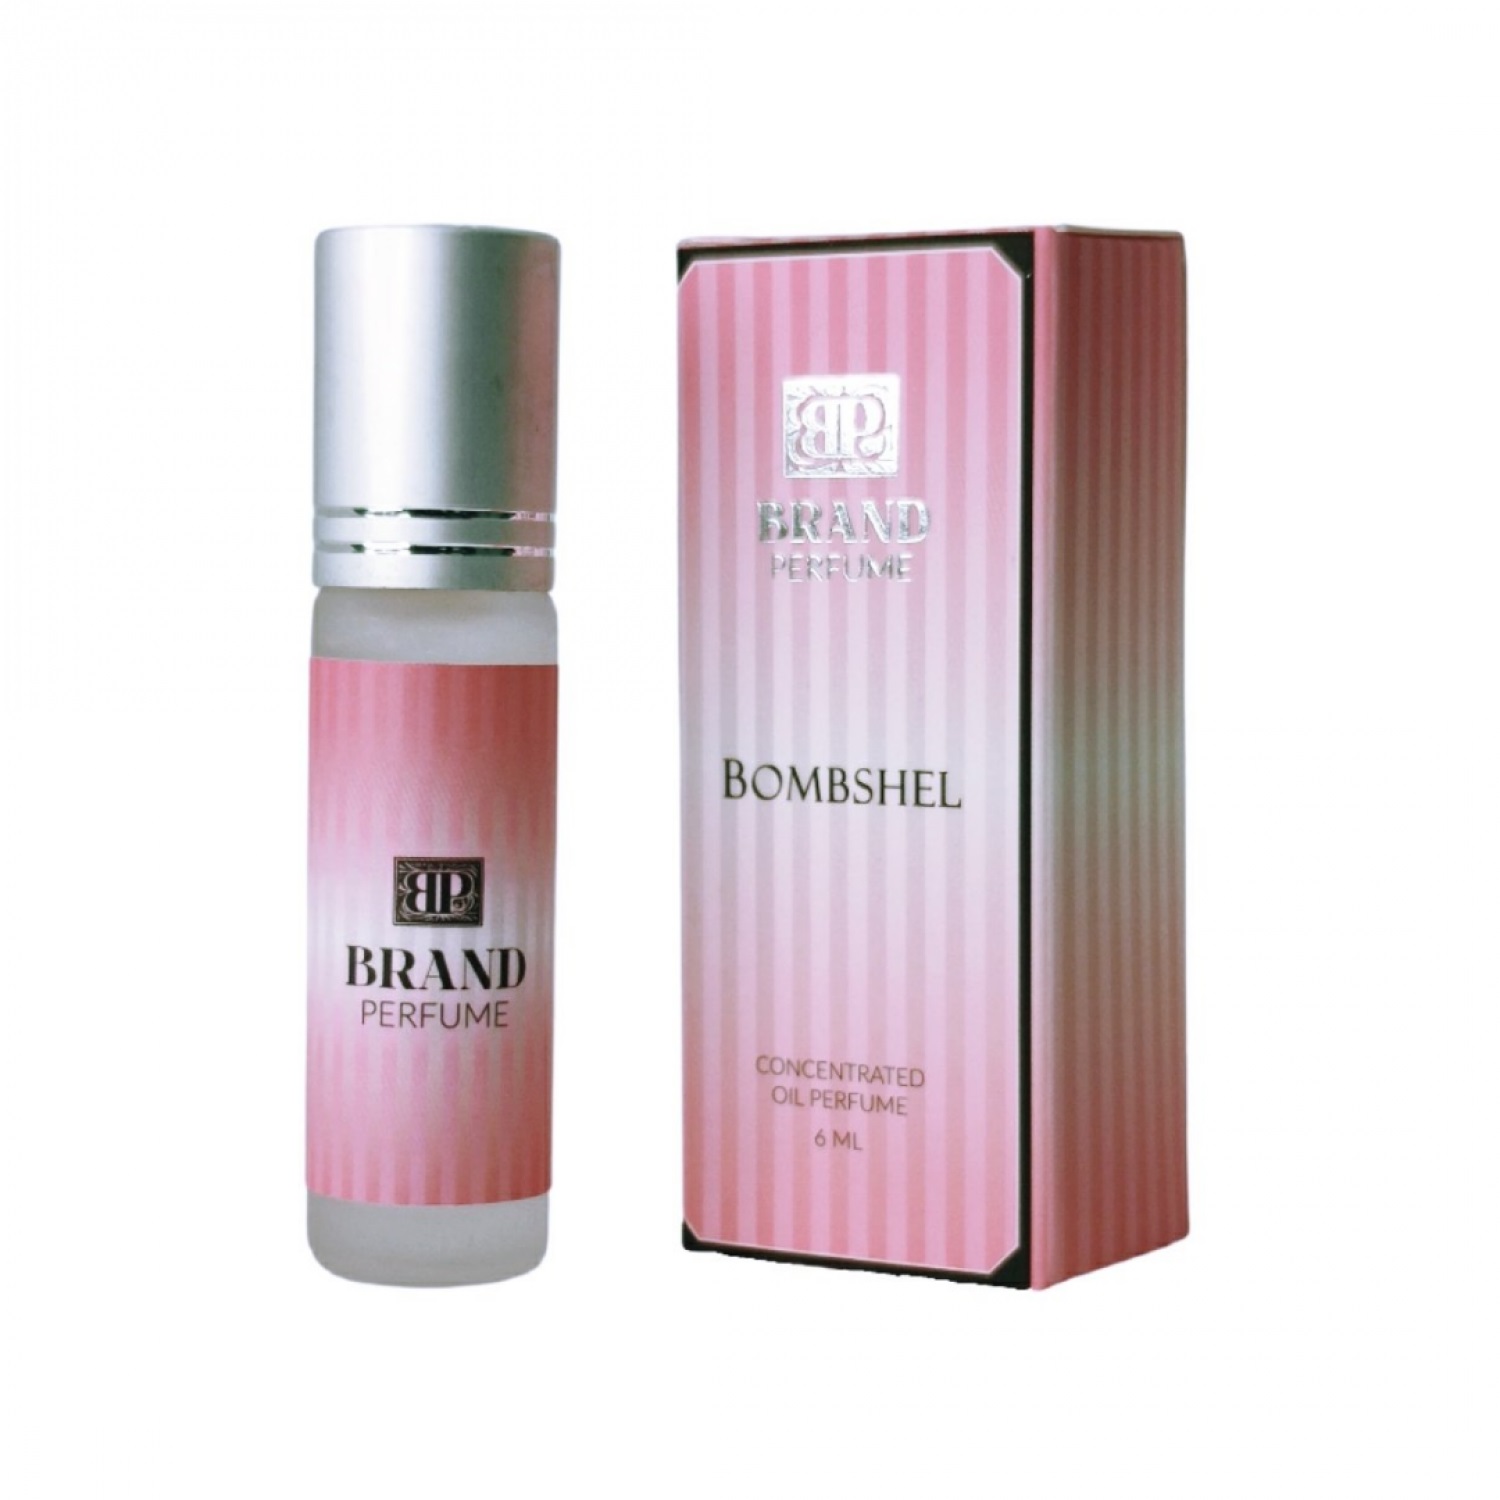 BOMBSHEL Concentrated Oil Perfume, Brand Perfume (Концентрированные масляные духи), ролик, 6 мл.